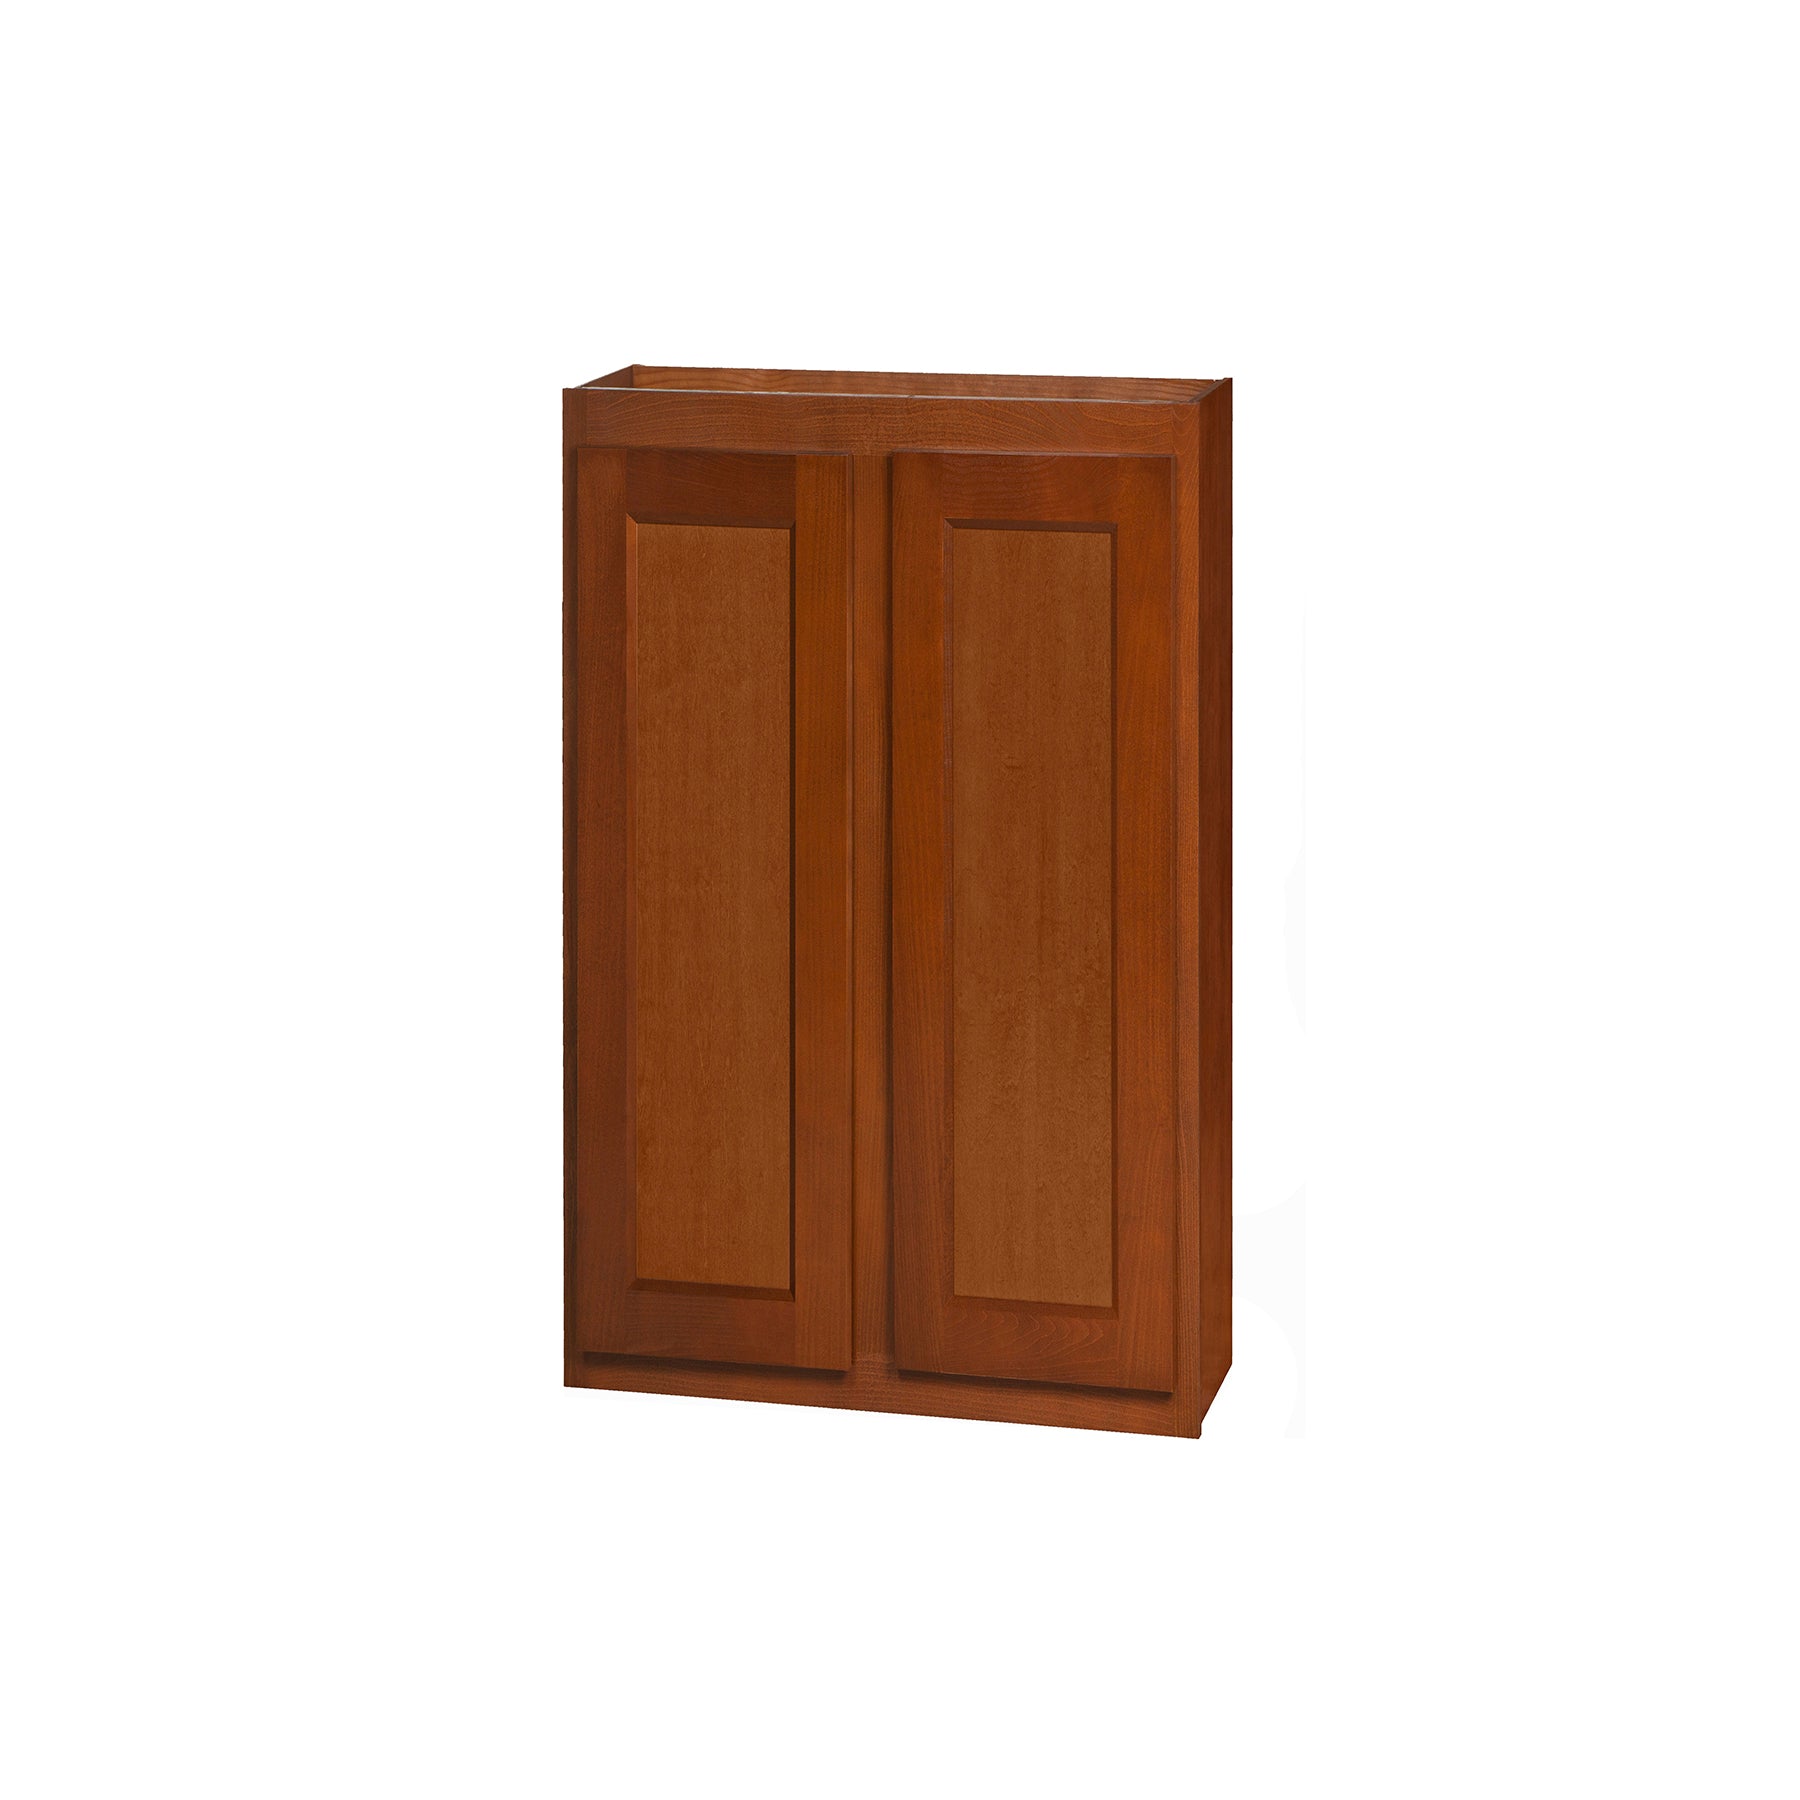 36 inch Wall Cabinets - Glenwood Shaker - 27 Inch W x 36 Inch H x 12 Inch D